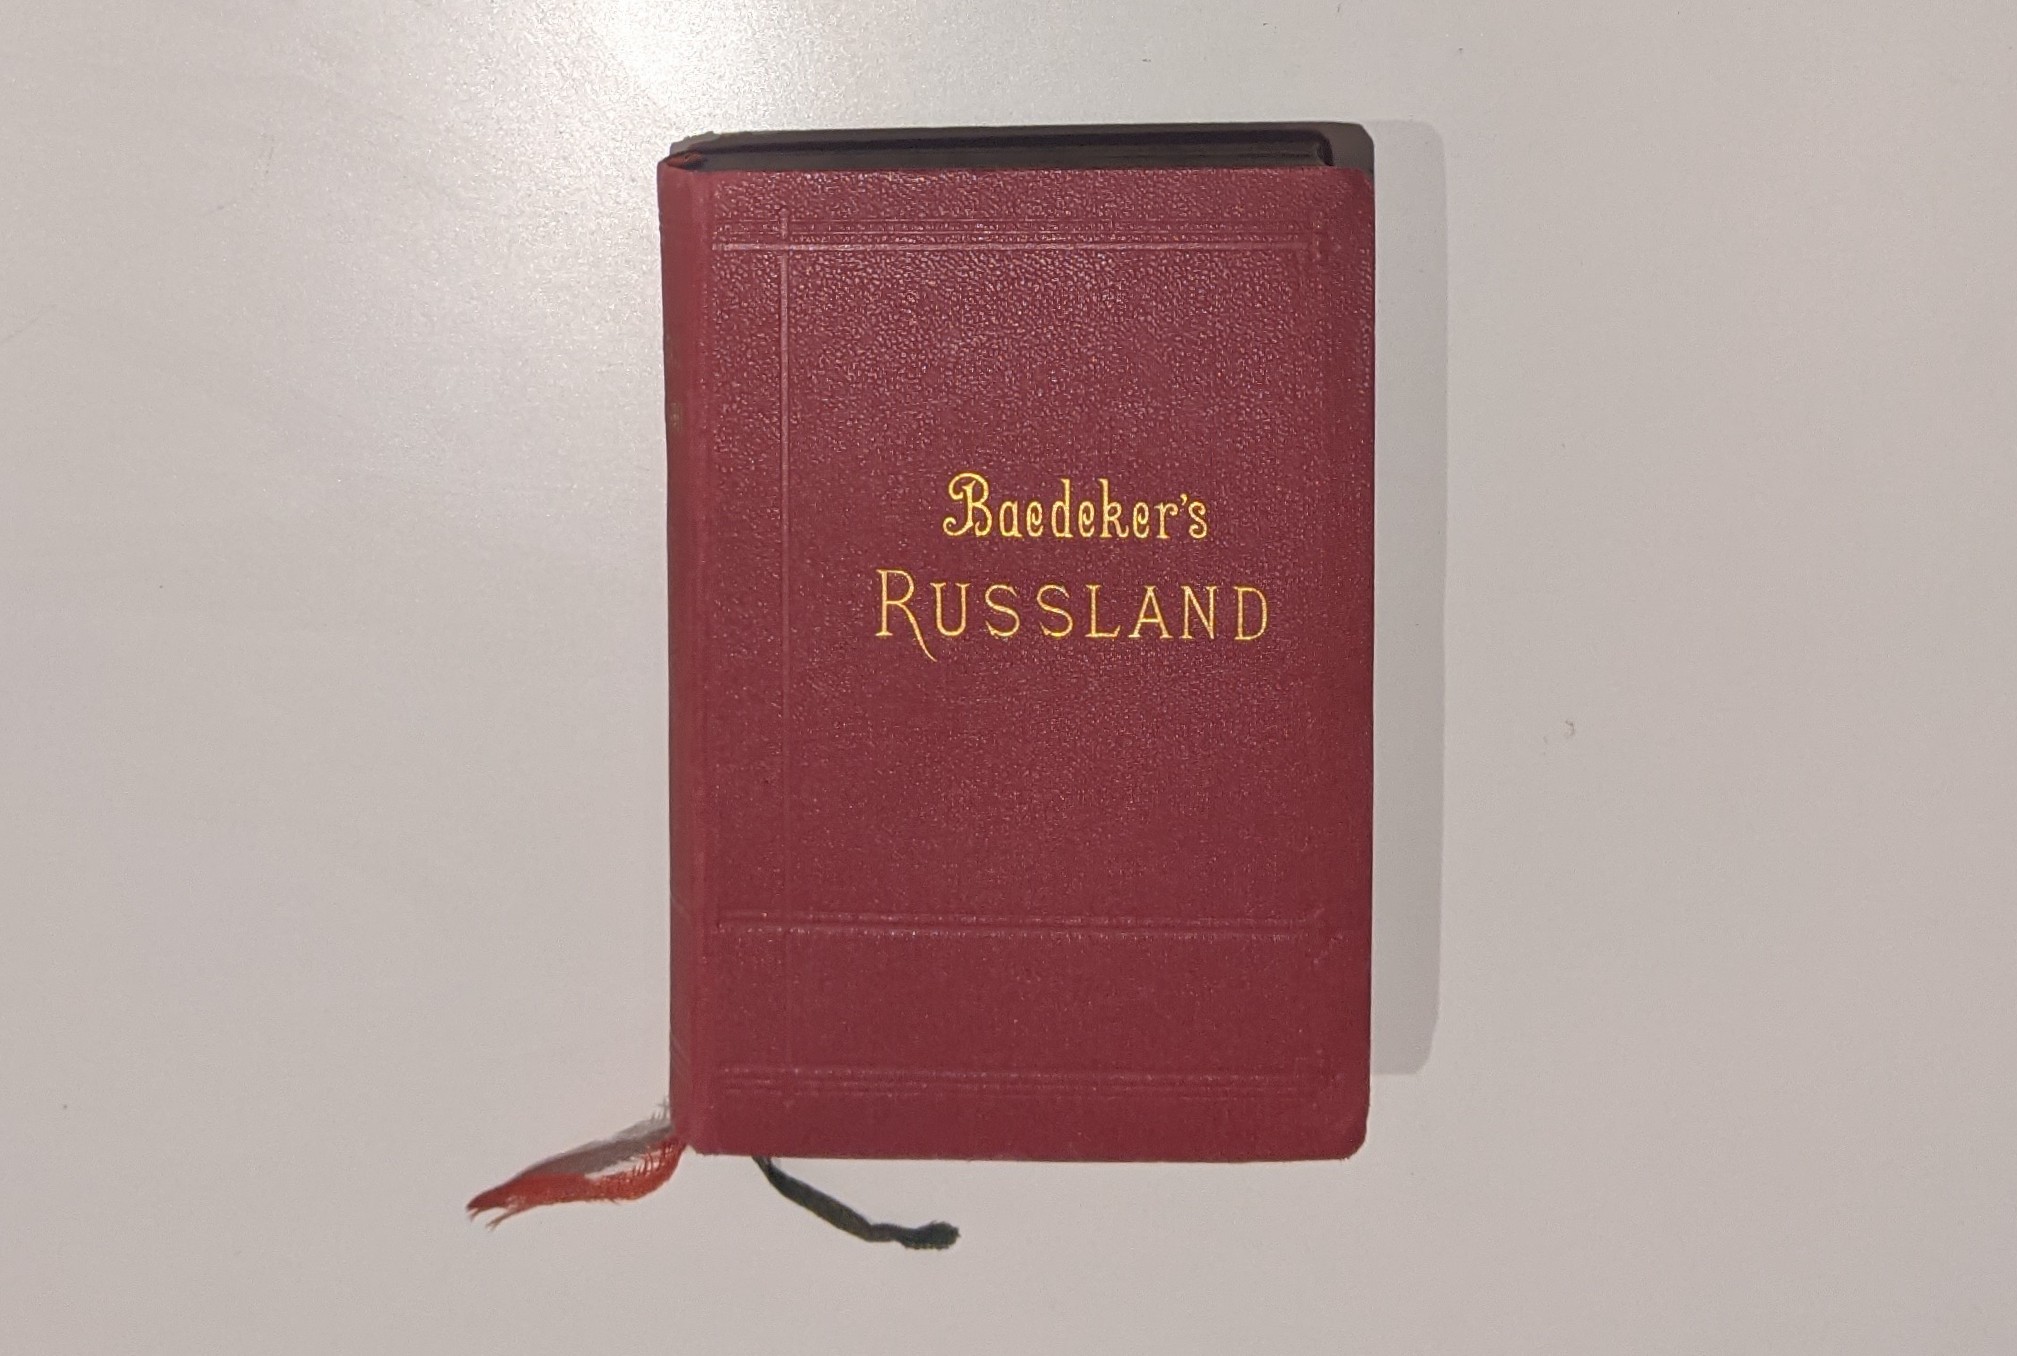 Bacdeker's RUSSLAND